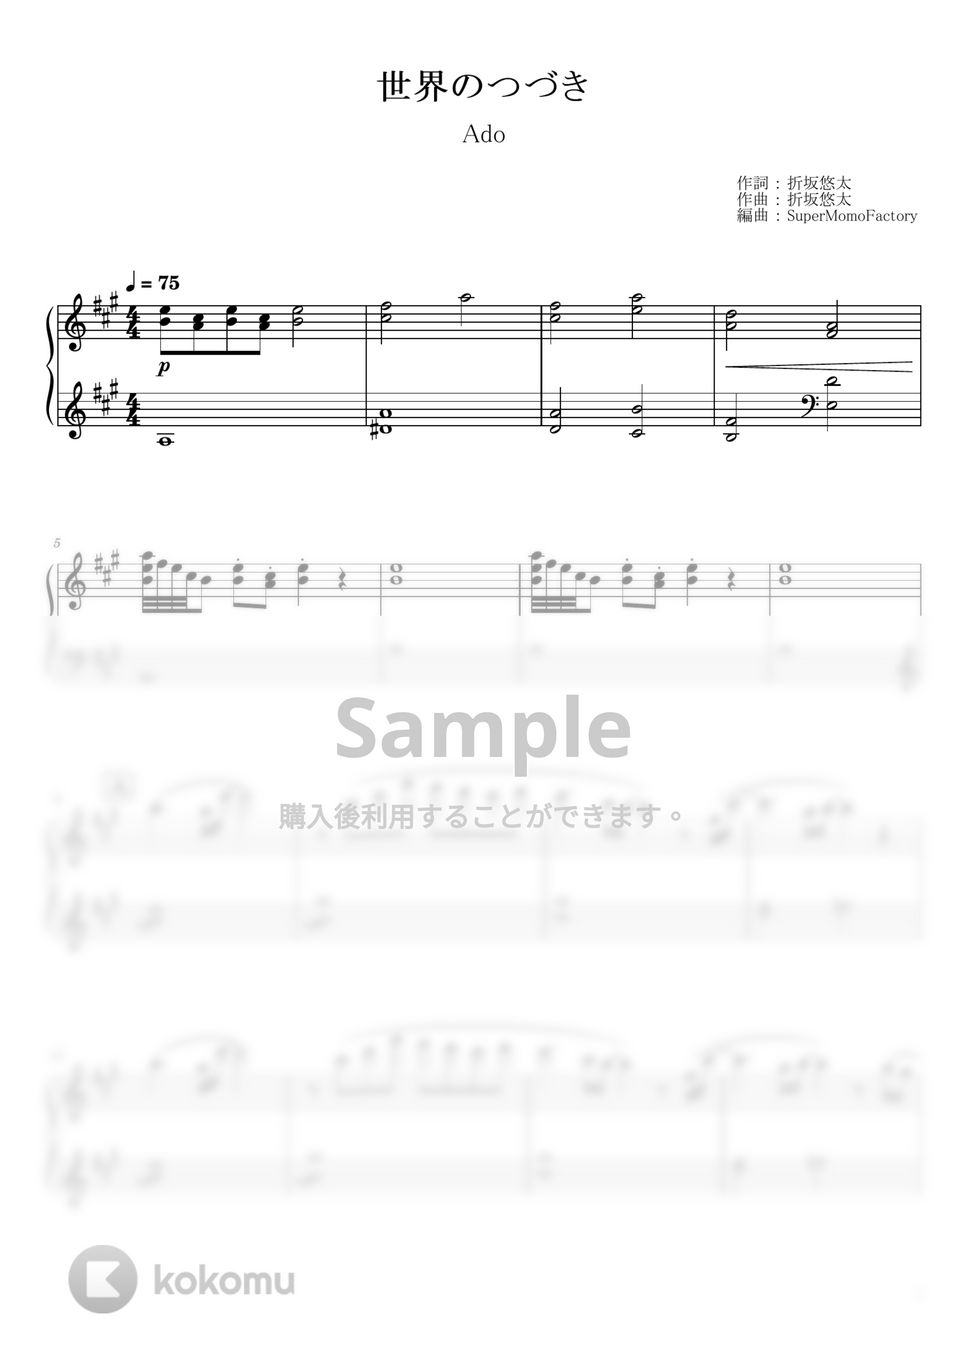 Ado - 世界のつづき (ピアノソロ / 中級～上級) by SuperMomoFactory